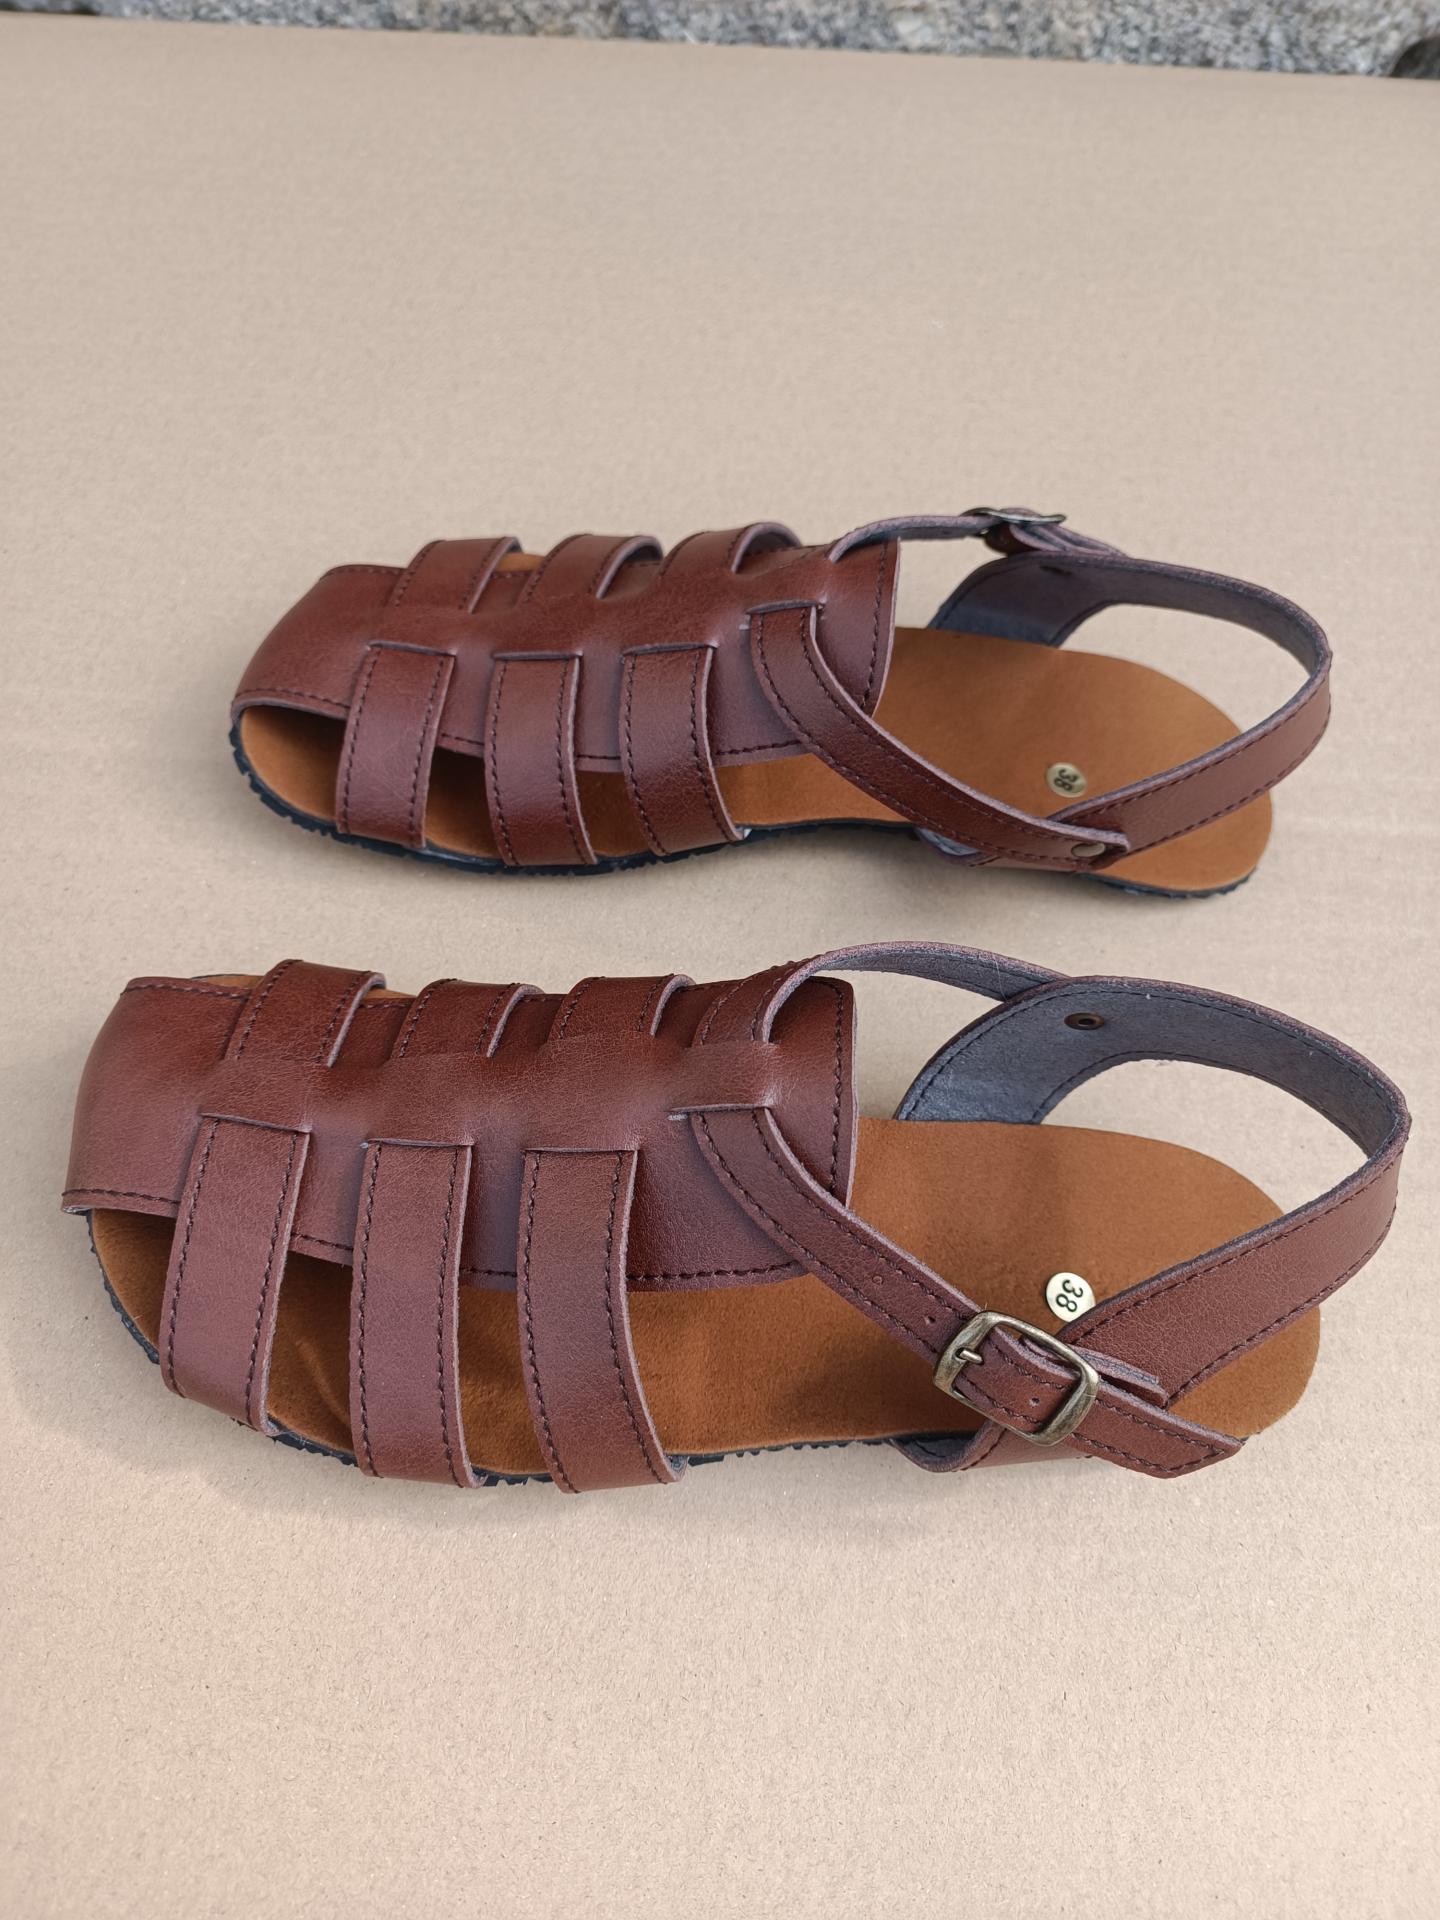 BAREFOOT SIERRA marón, sandalias para mujer y hombre, calzado descalzo, sandalias veganas, eco-friendly, barefoot.